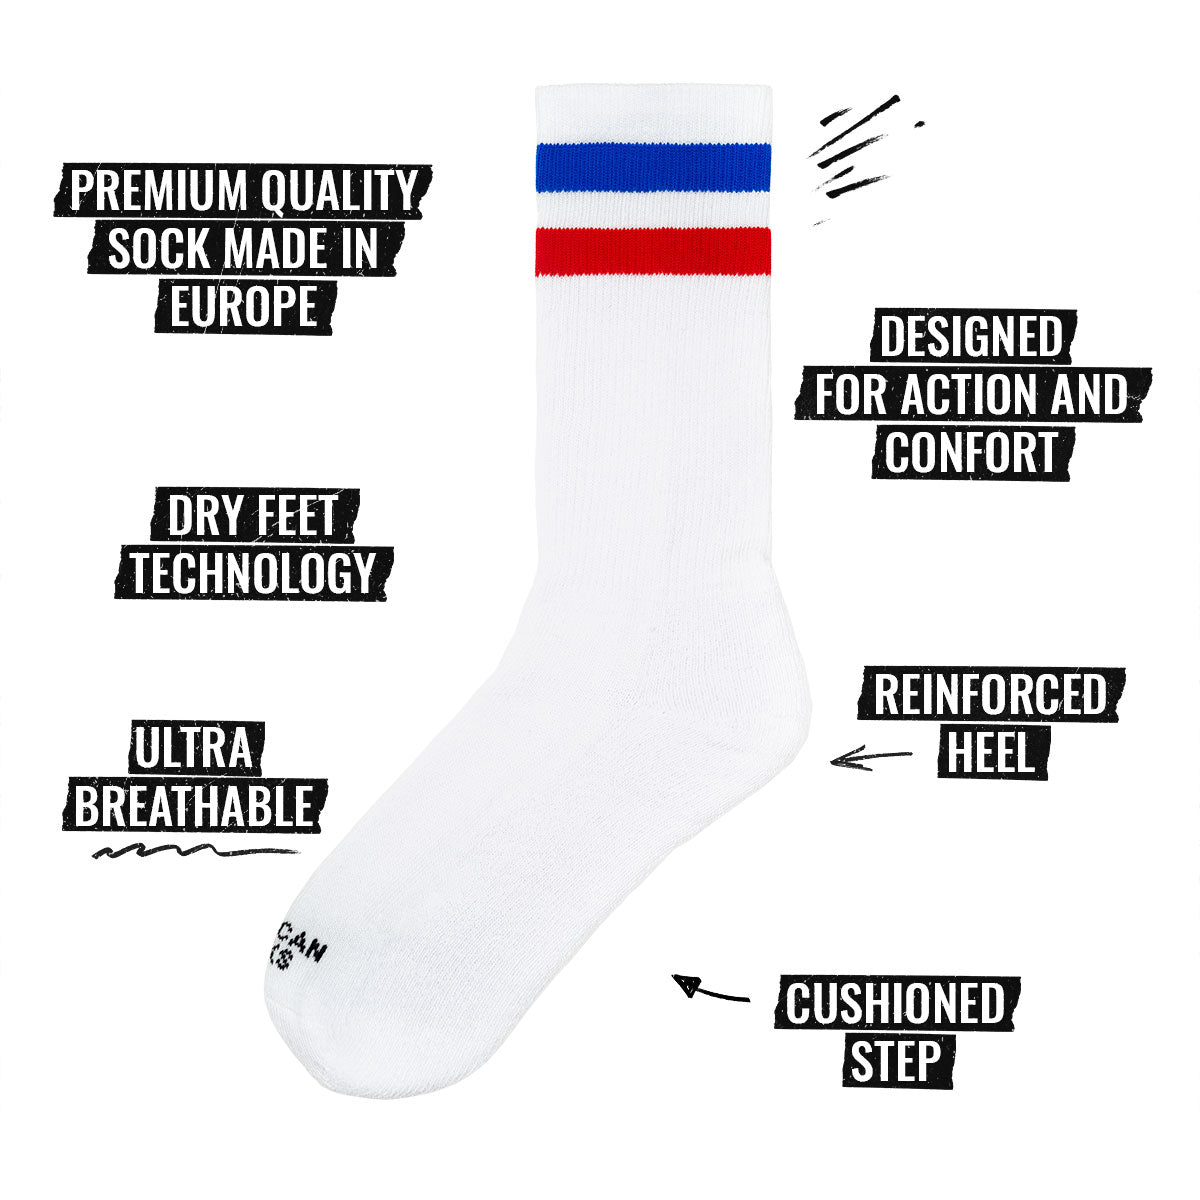 American Socks Mid High socks specifications image